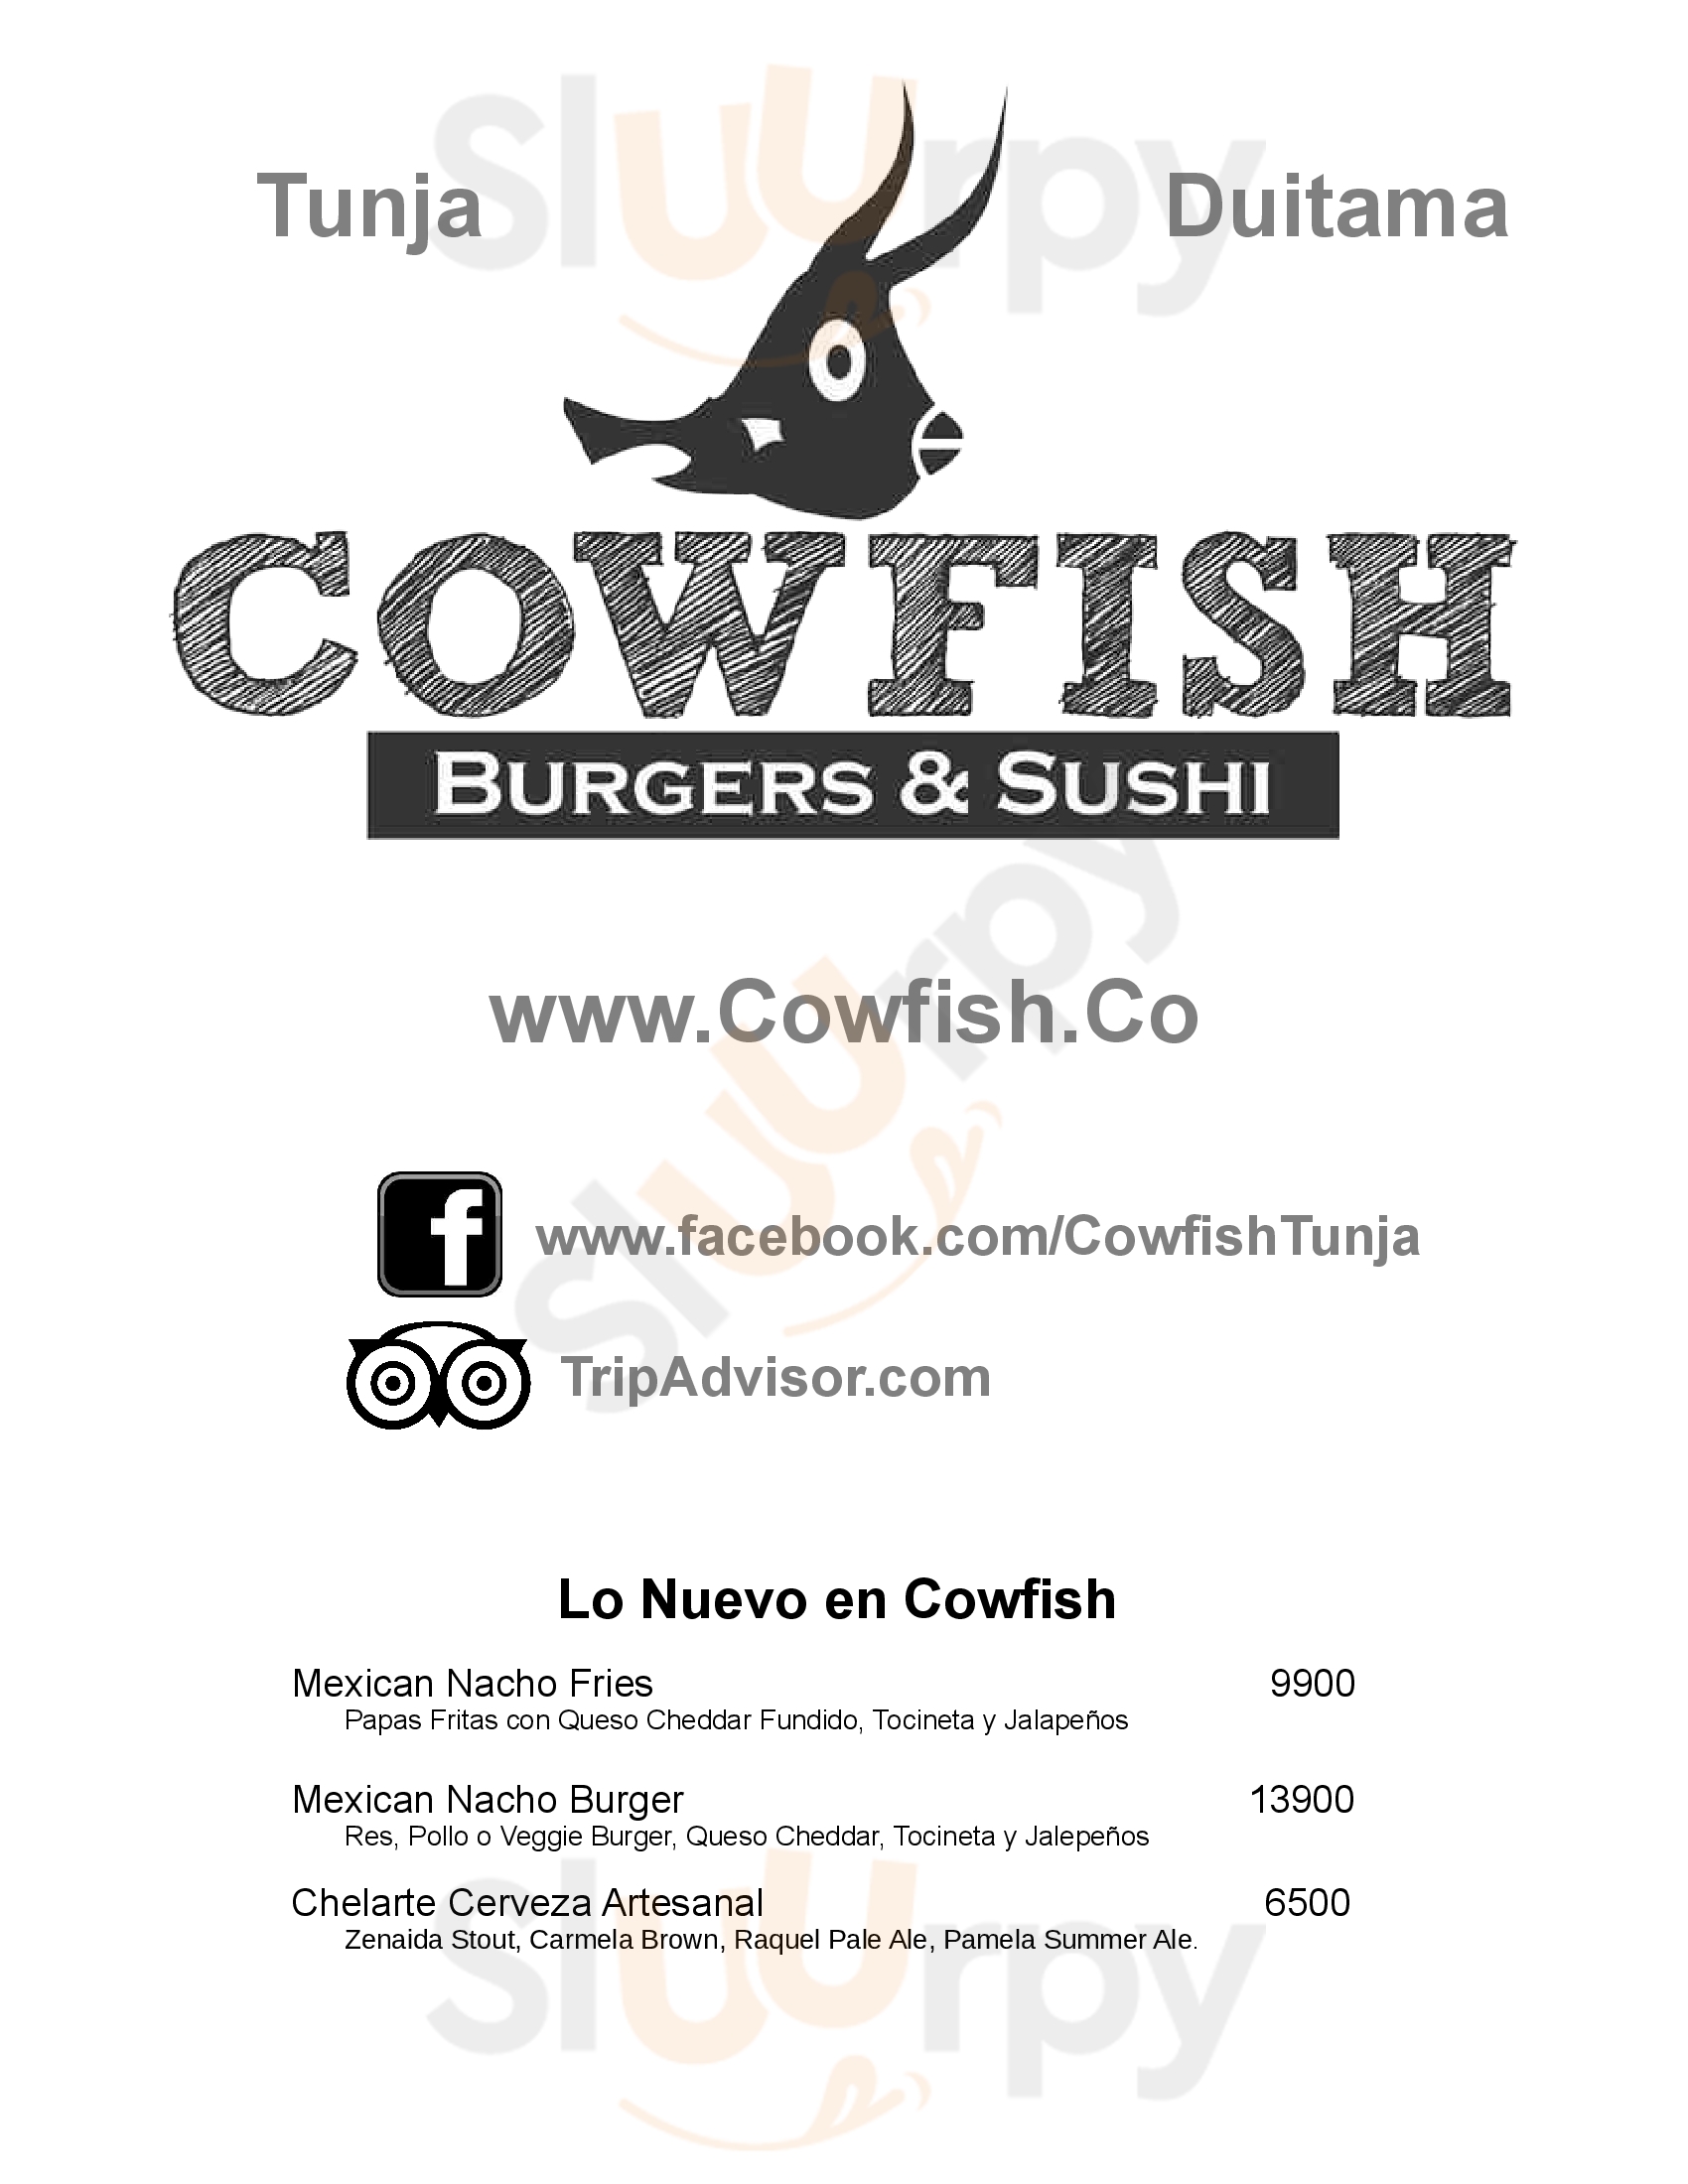 Cowfish Burgers & Sushi Duitama Menu - 1